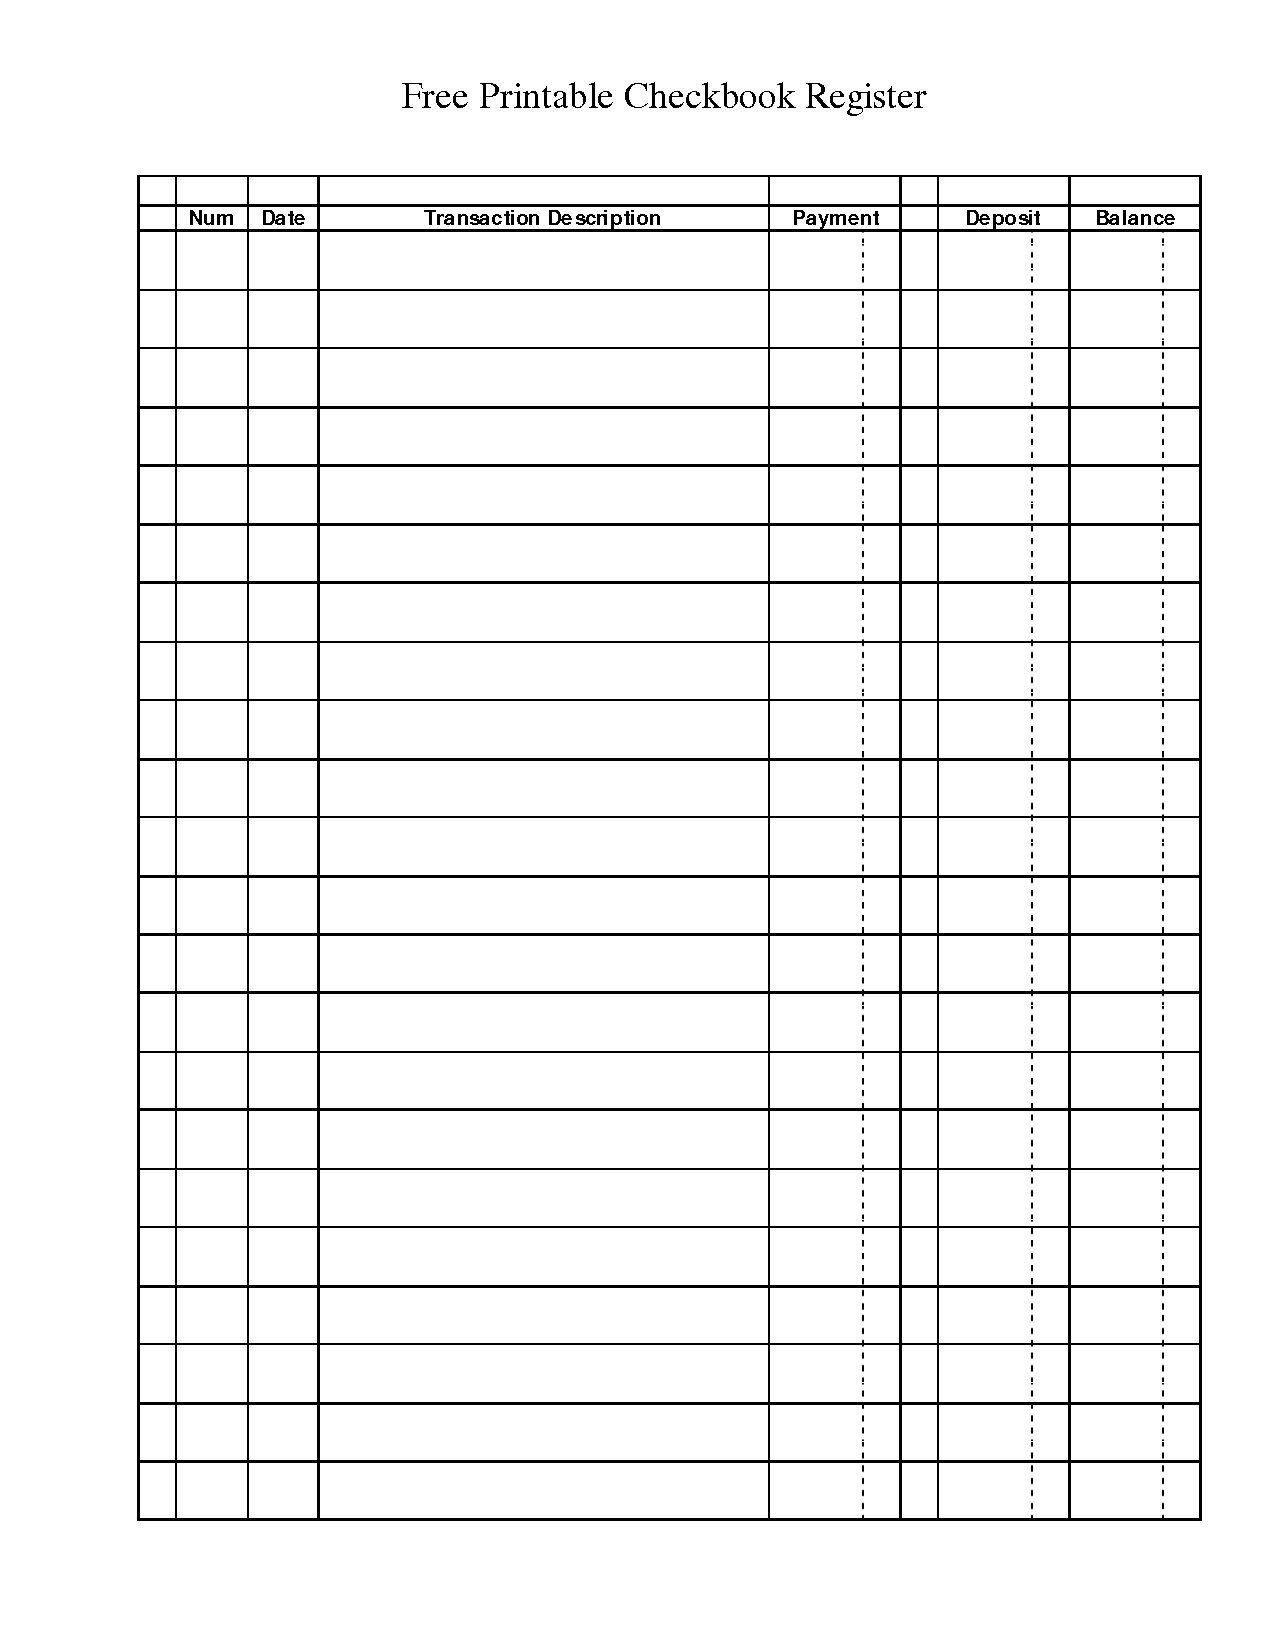 Free Printable Template Chores | Free Printable Check Register - Free Printable Checkbook Register